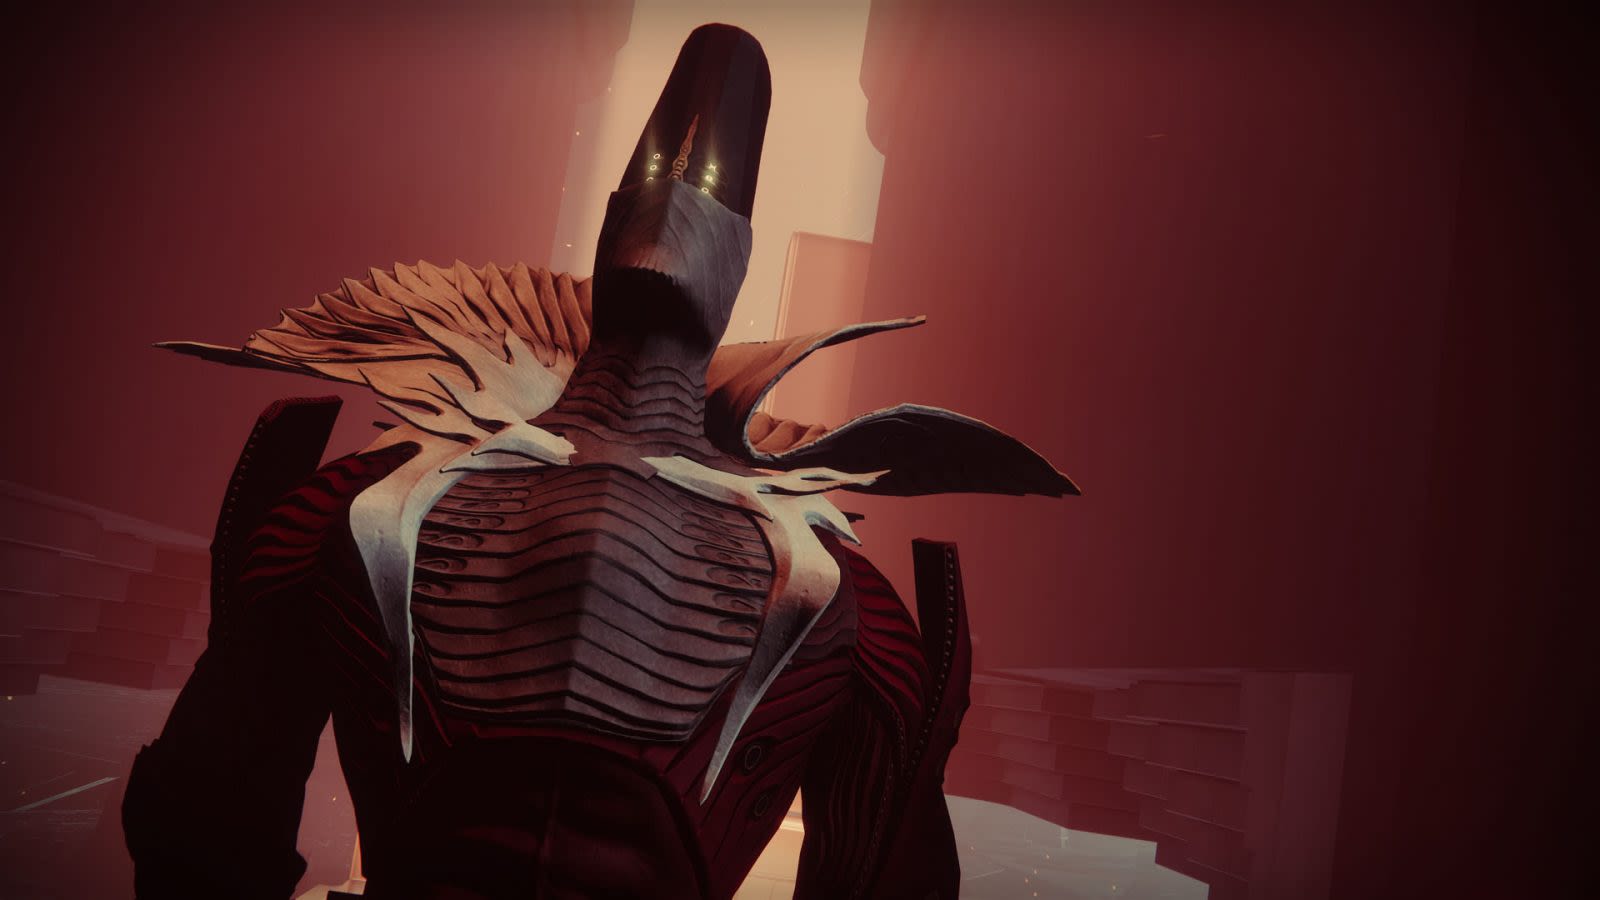 Destiny 2 Pantheon datamine reveals 2 exotic raid weapons as quest rewards - Dexerto